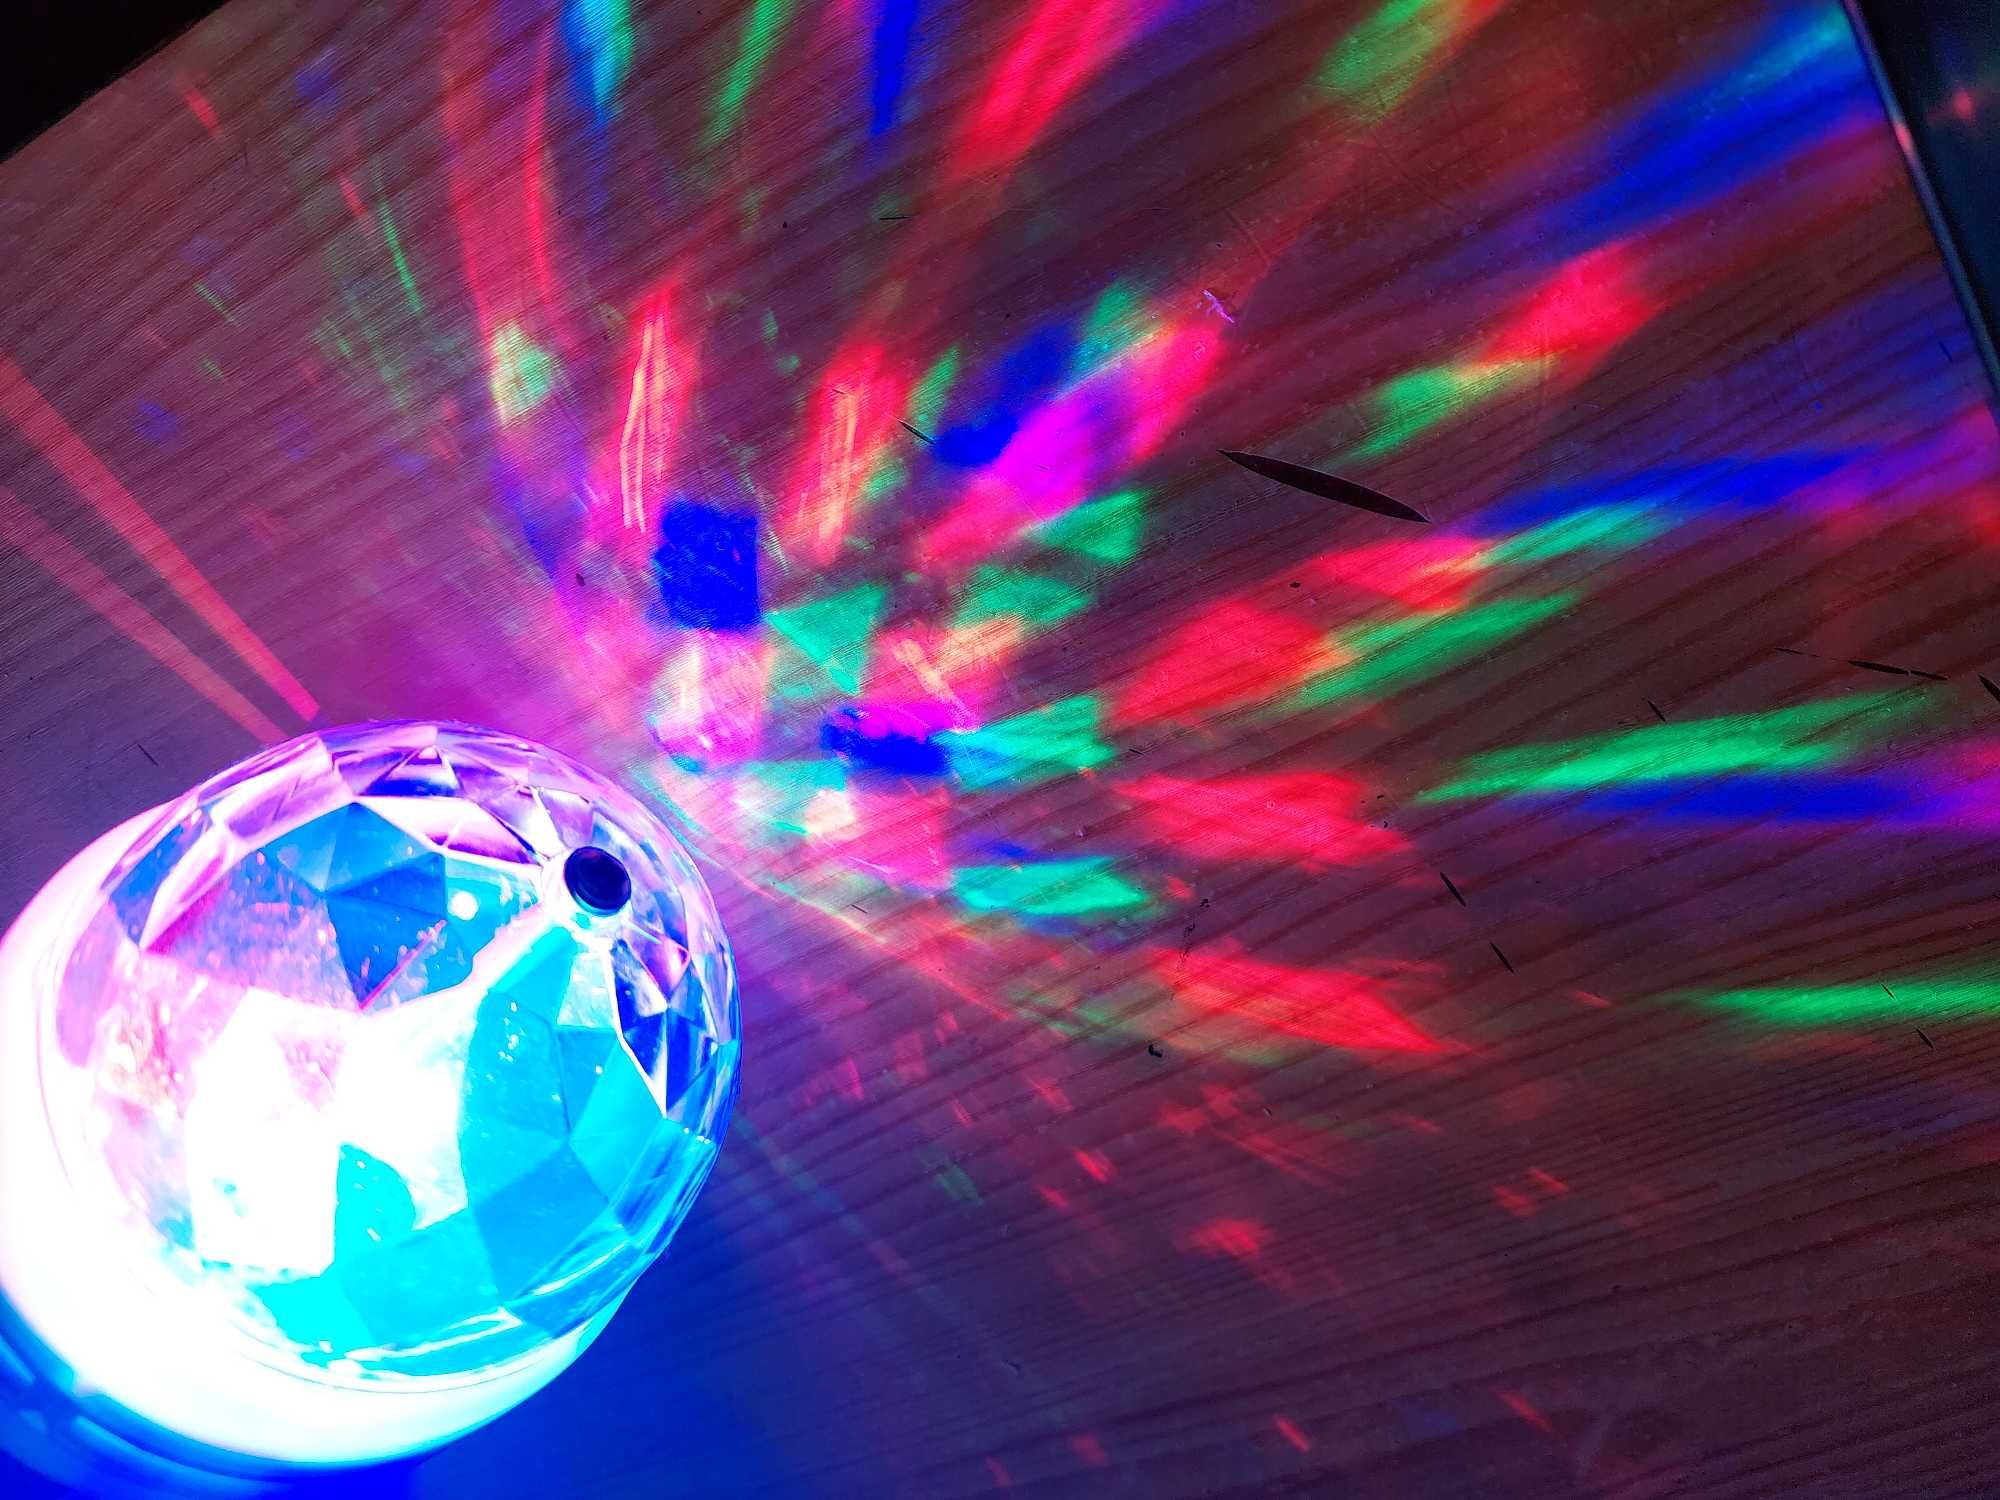 LED лампа вращающийся цветной disco шар